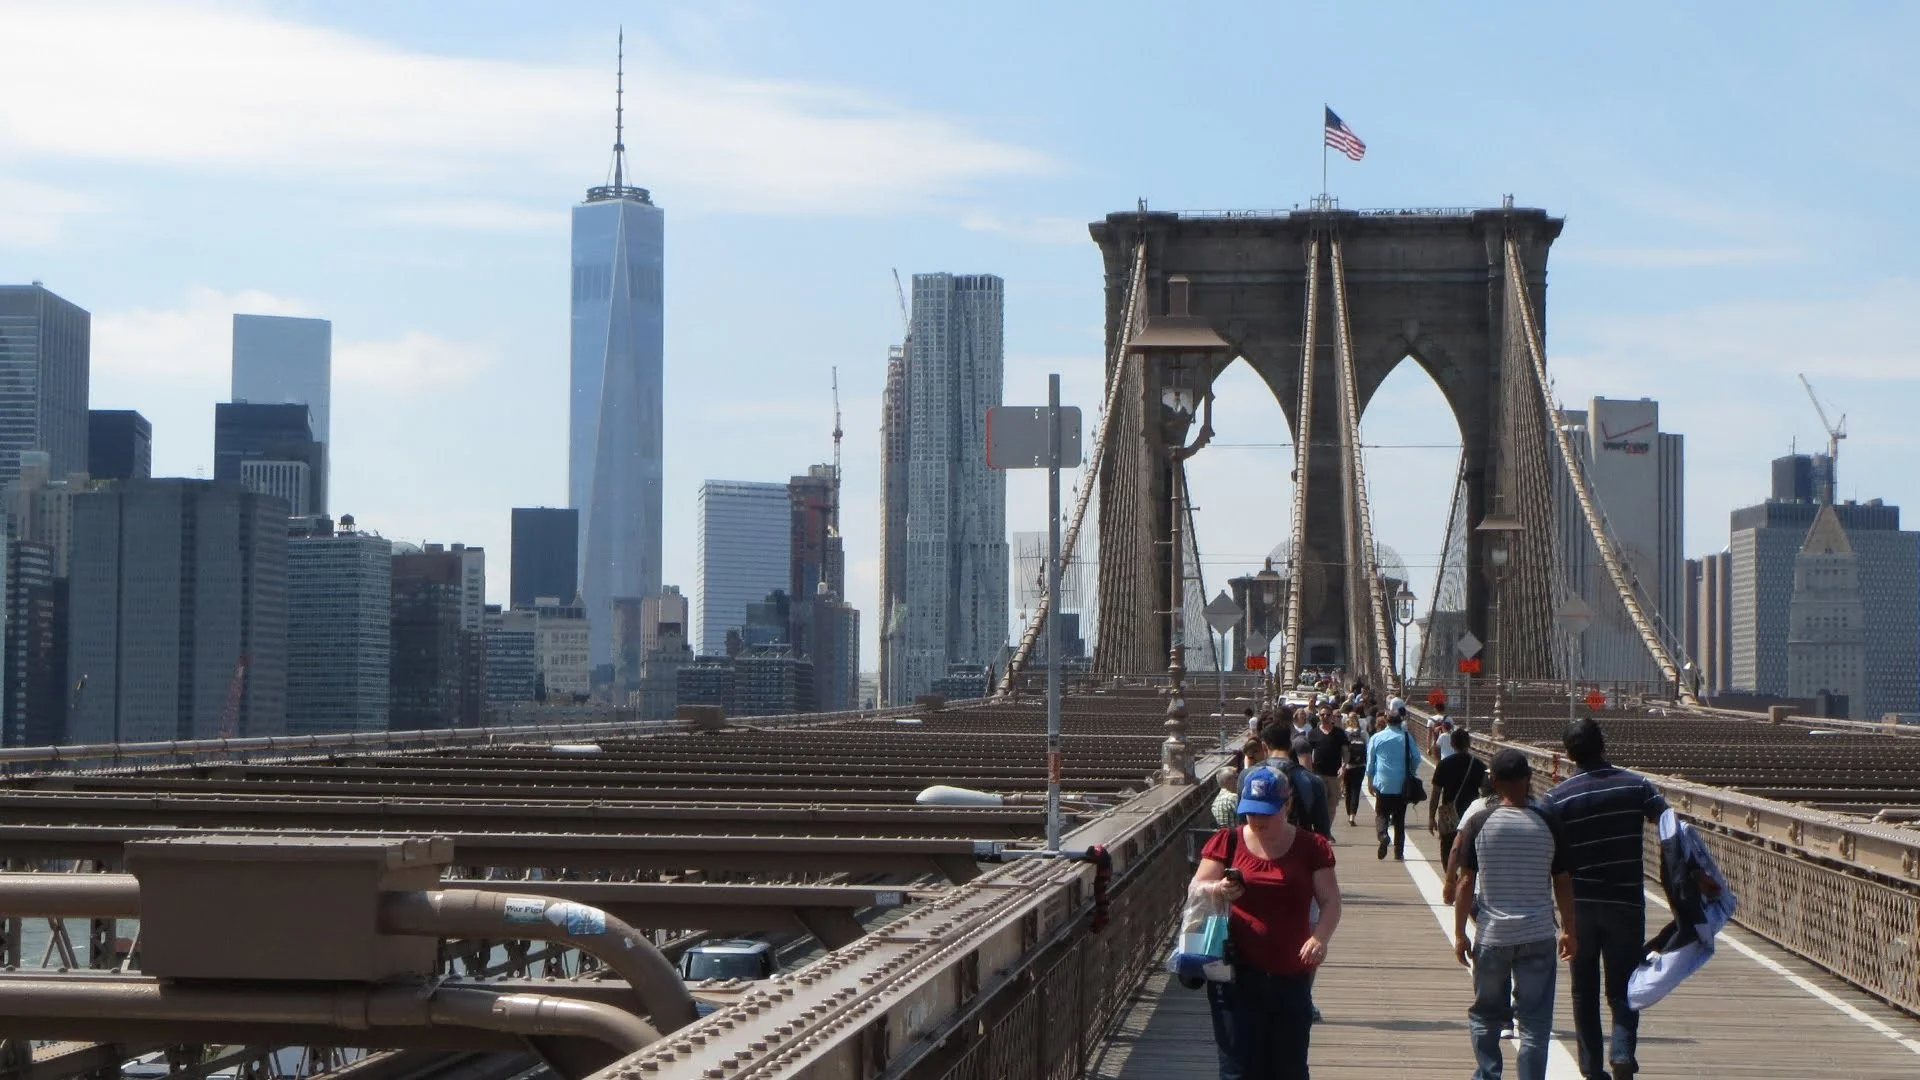 Sightseeing in New York City / One World Trade Center / Brooklyn bridge / 911 museum / highlights – YouTube